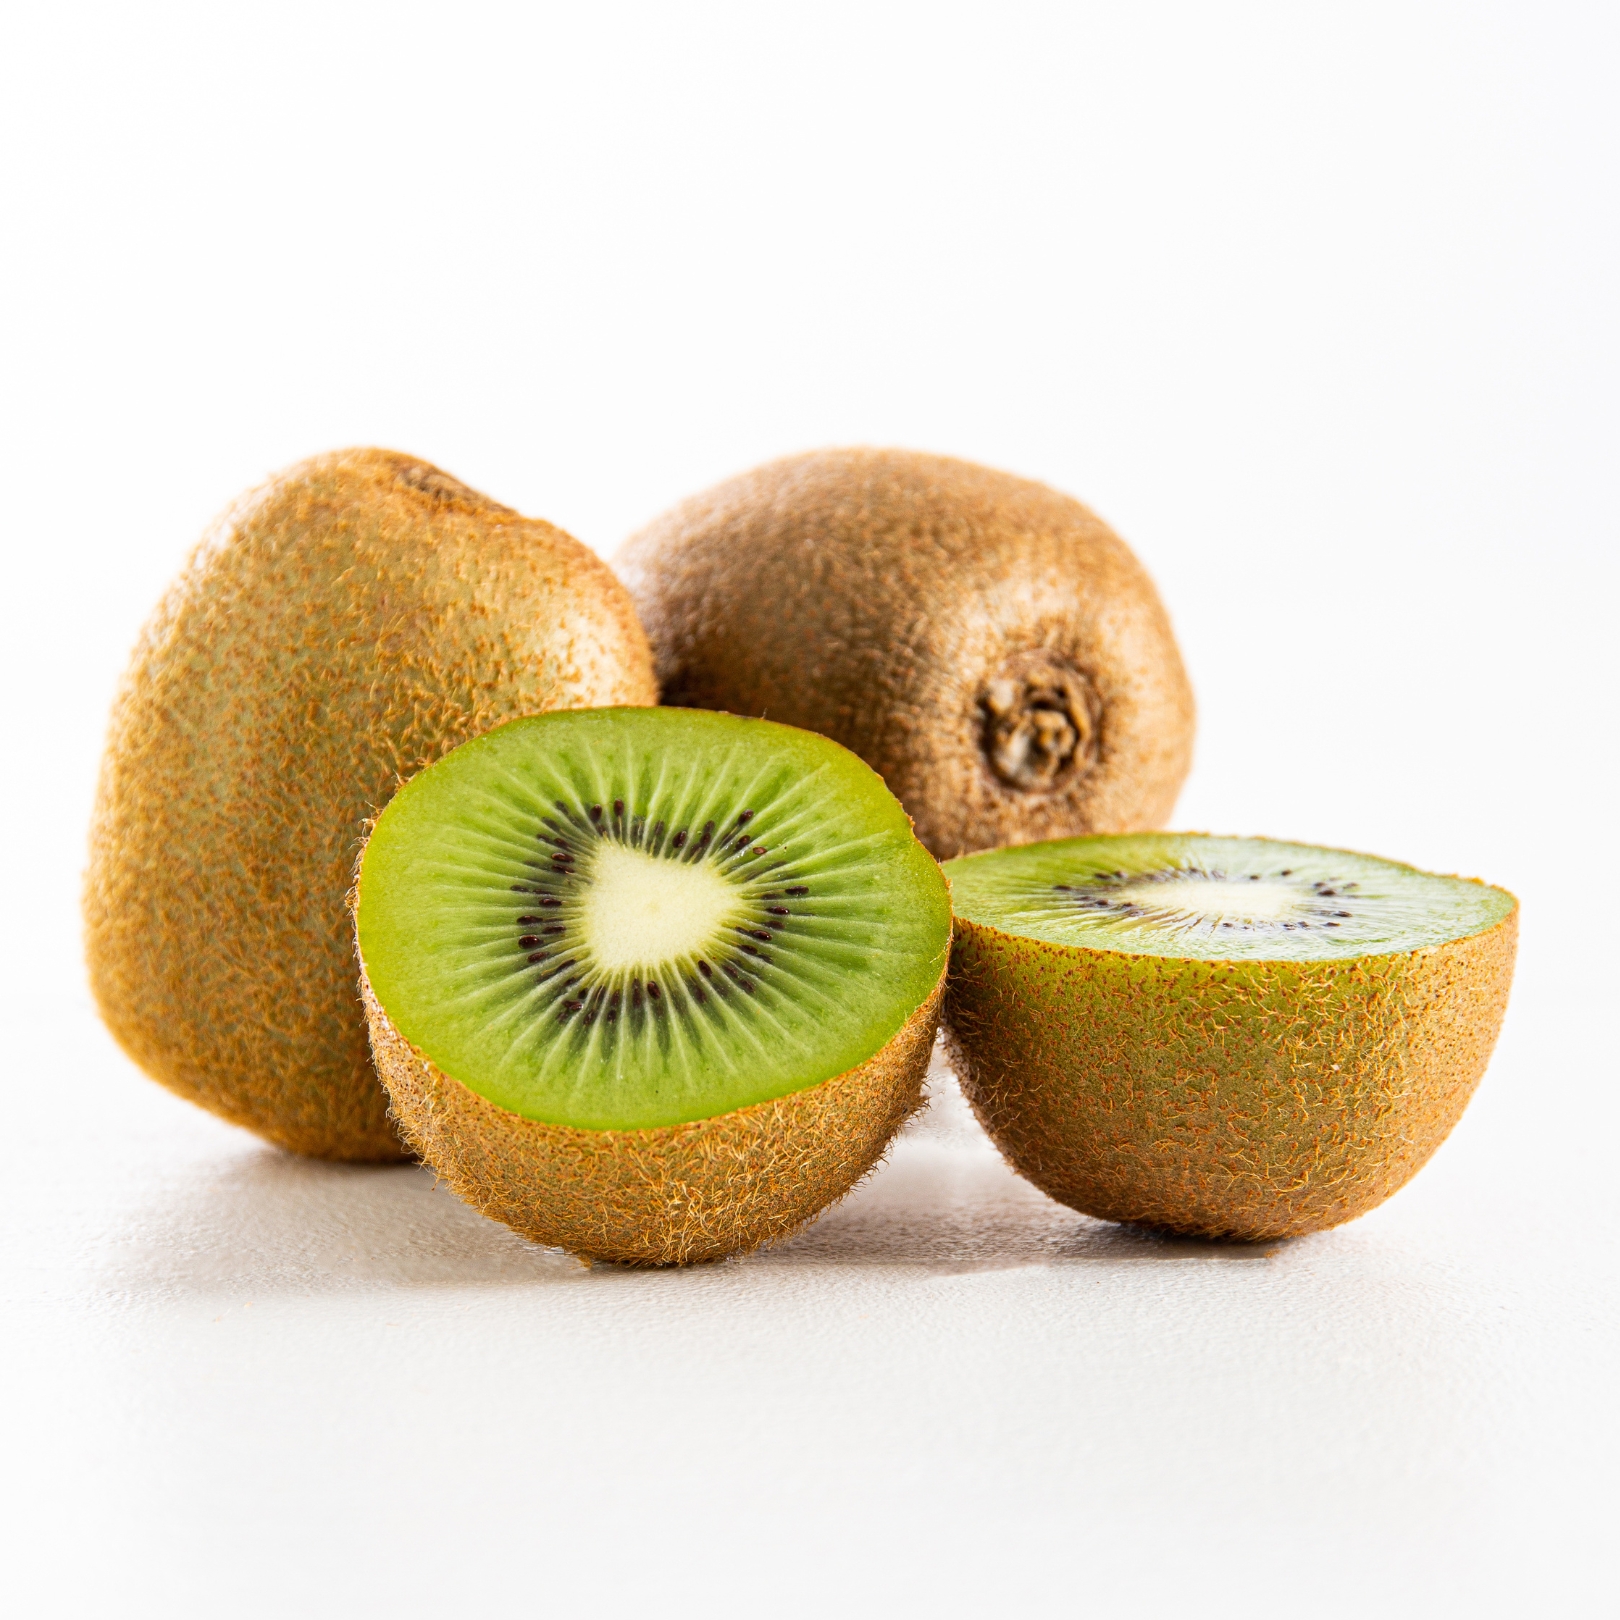 Buy Kiwifruit - Green Online NZ